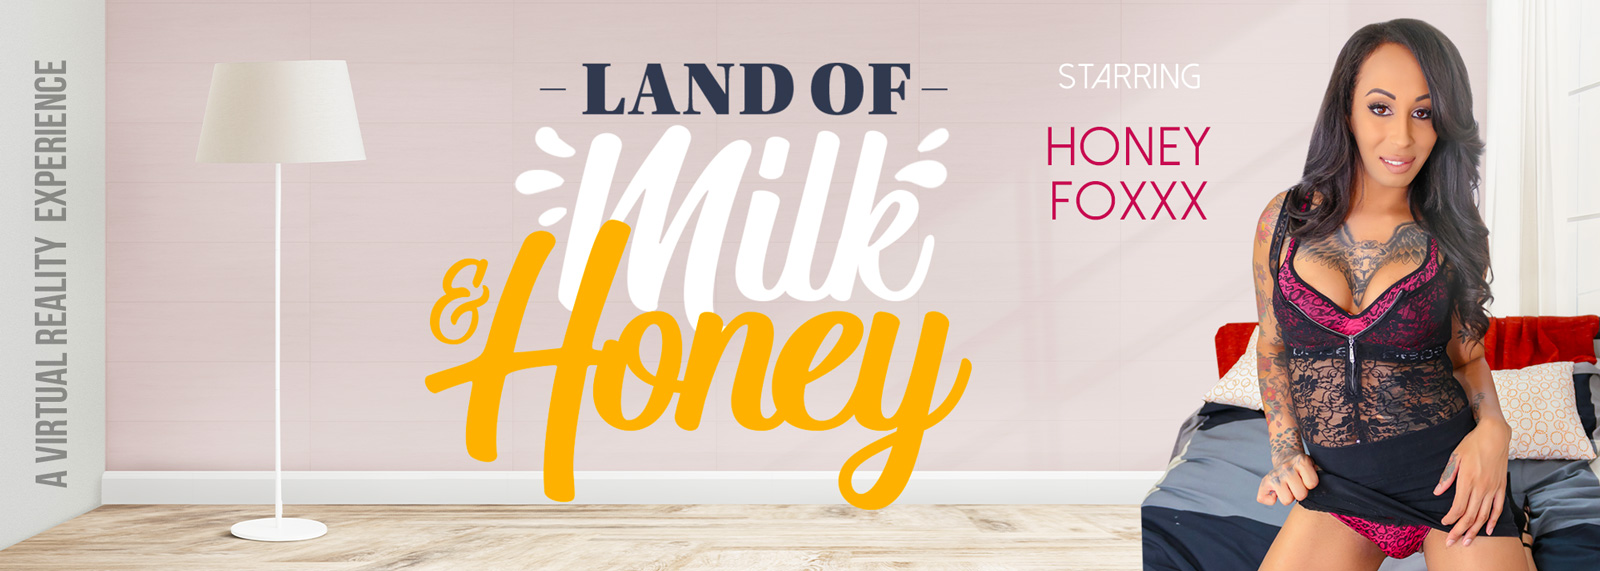 Land of Milk and Honey - Trans VR Porn Video, Starring: Honey Foxxx